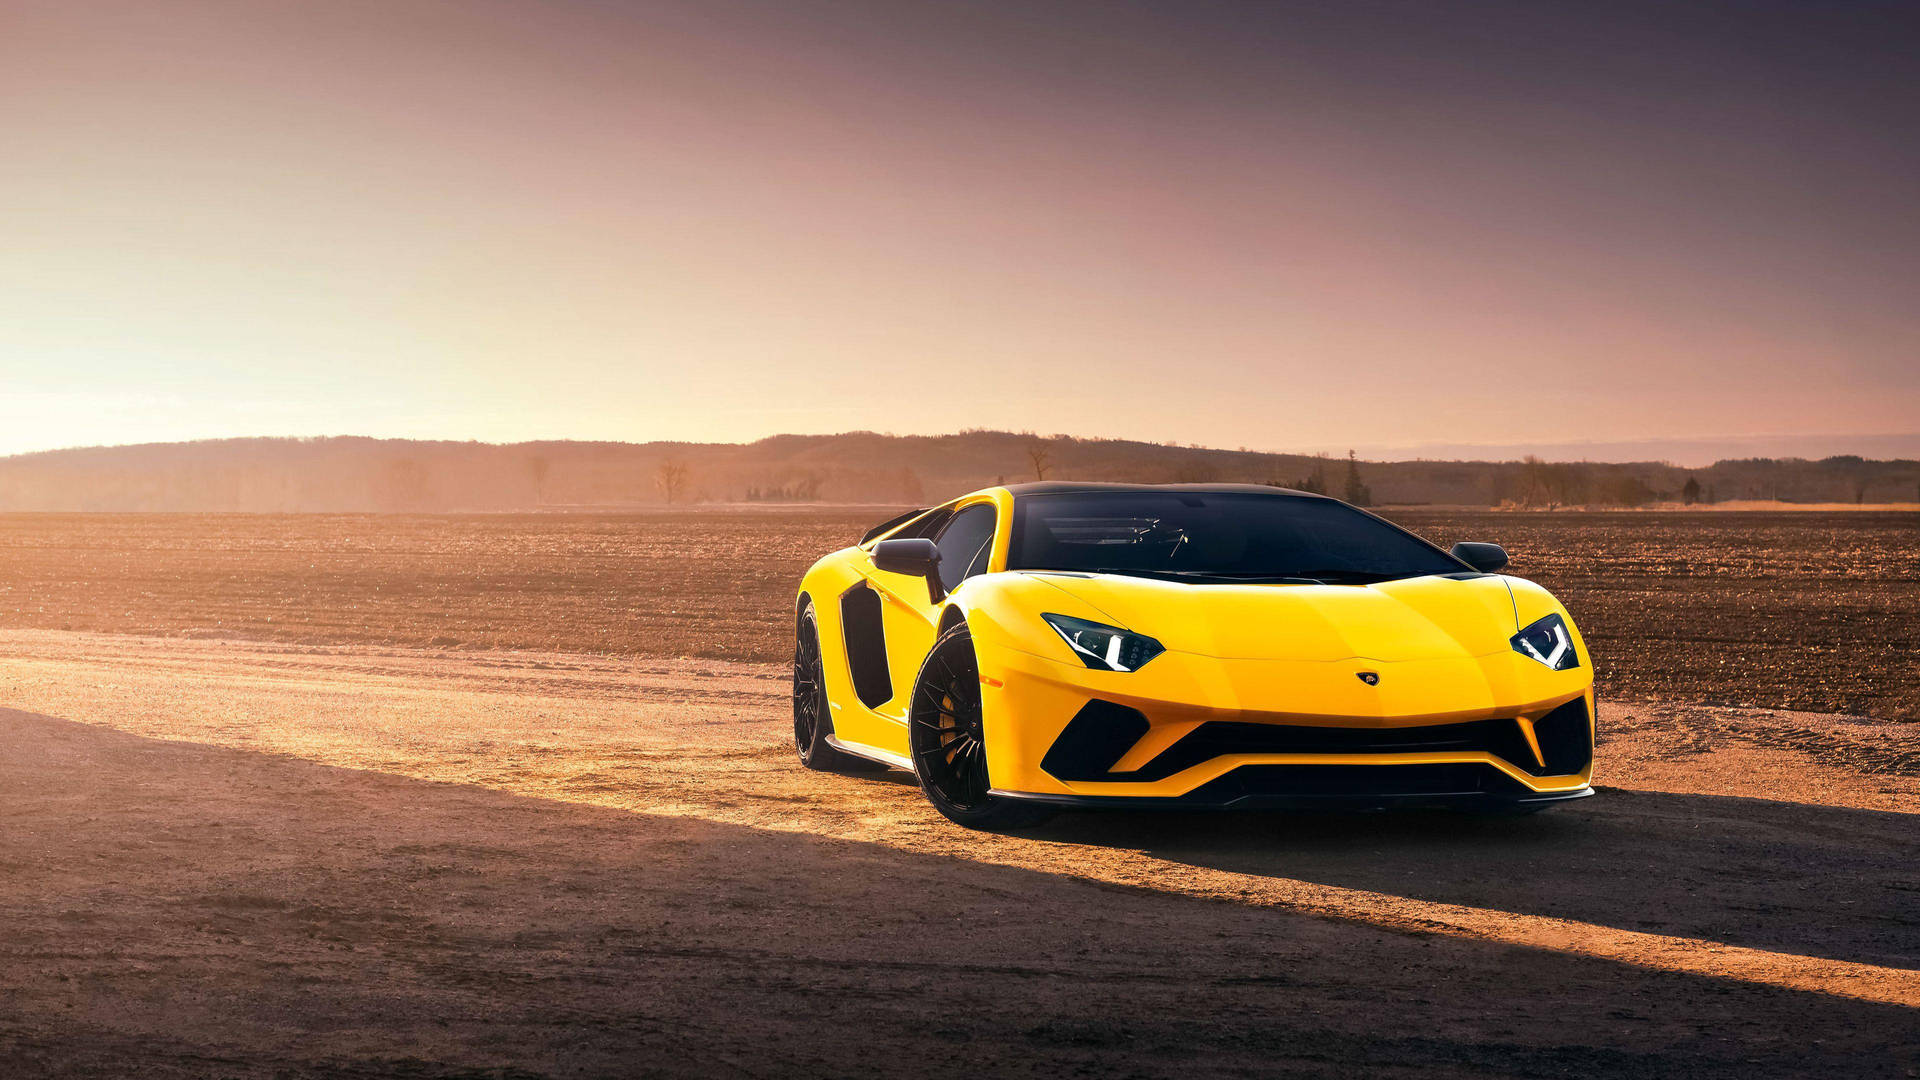 Cooleautos: Gelber Schlanker Lamborghini Wallpaper